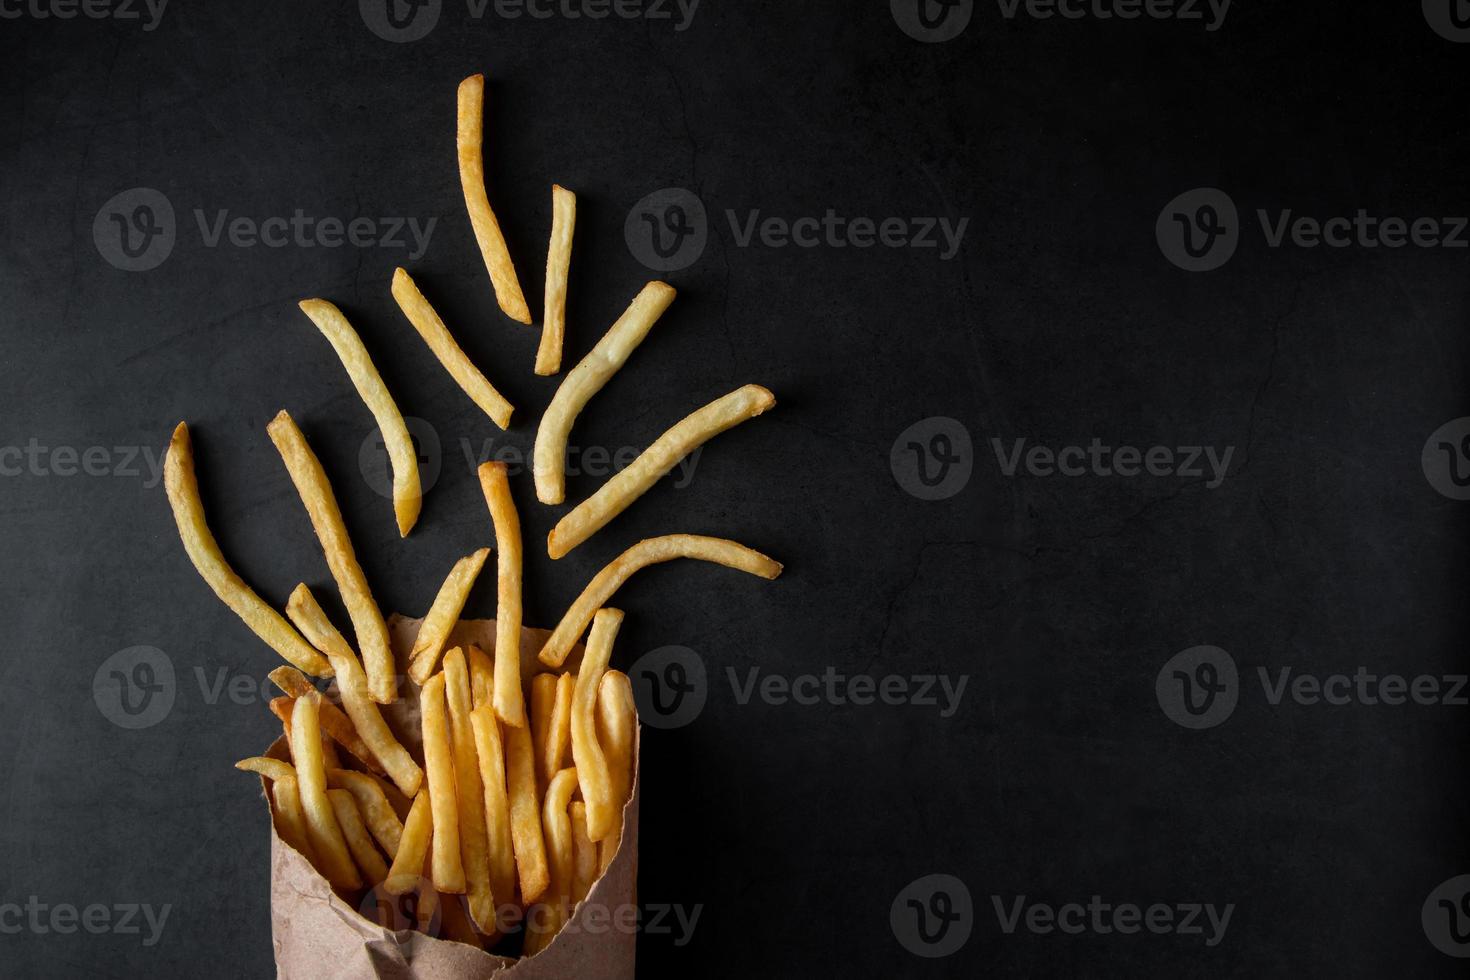 hete knapperige frietjes in een papieren zak op zwarte achtergrond. lekker Amerikaans fastfood. foto